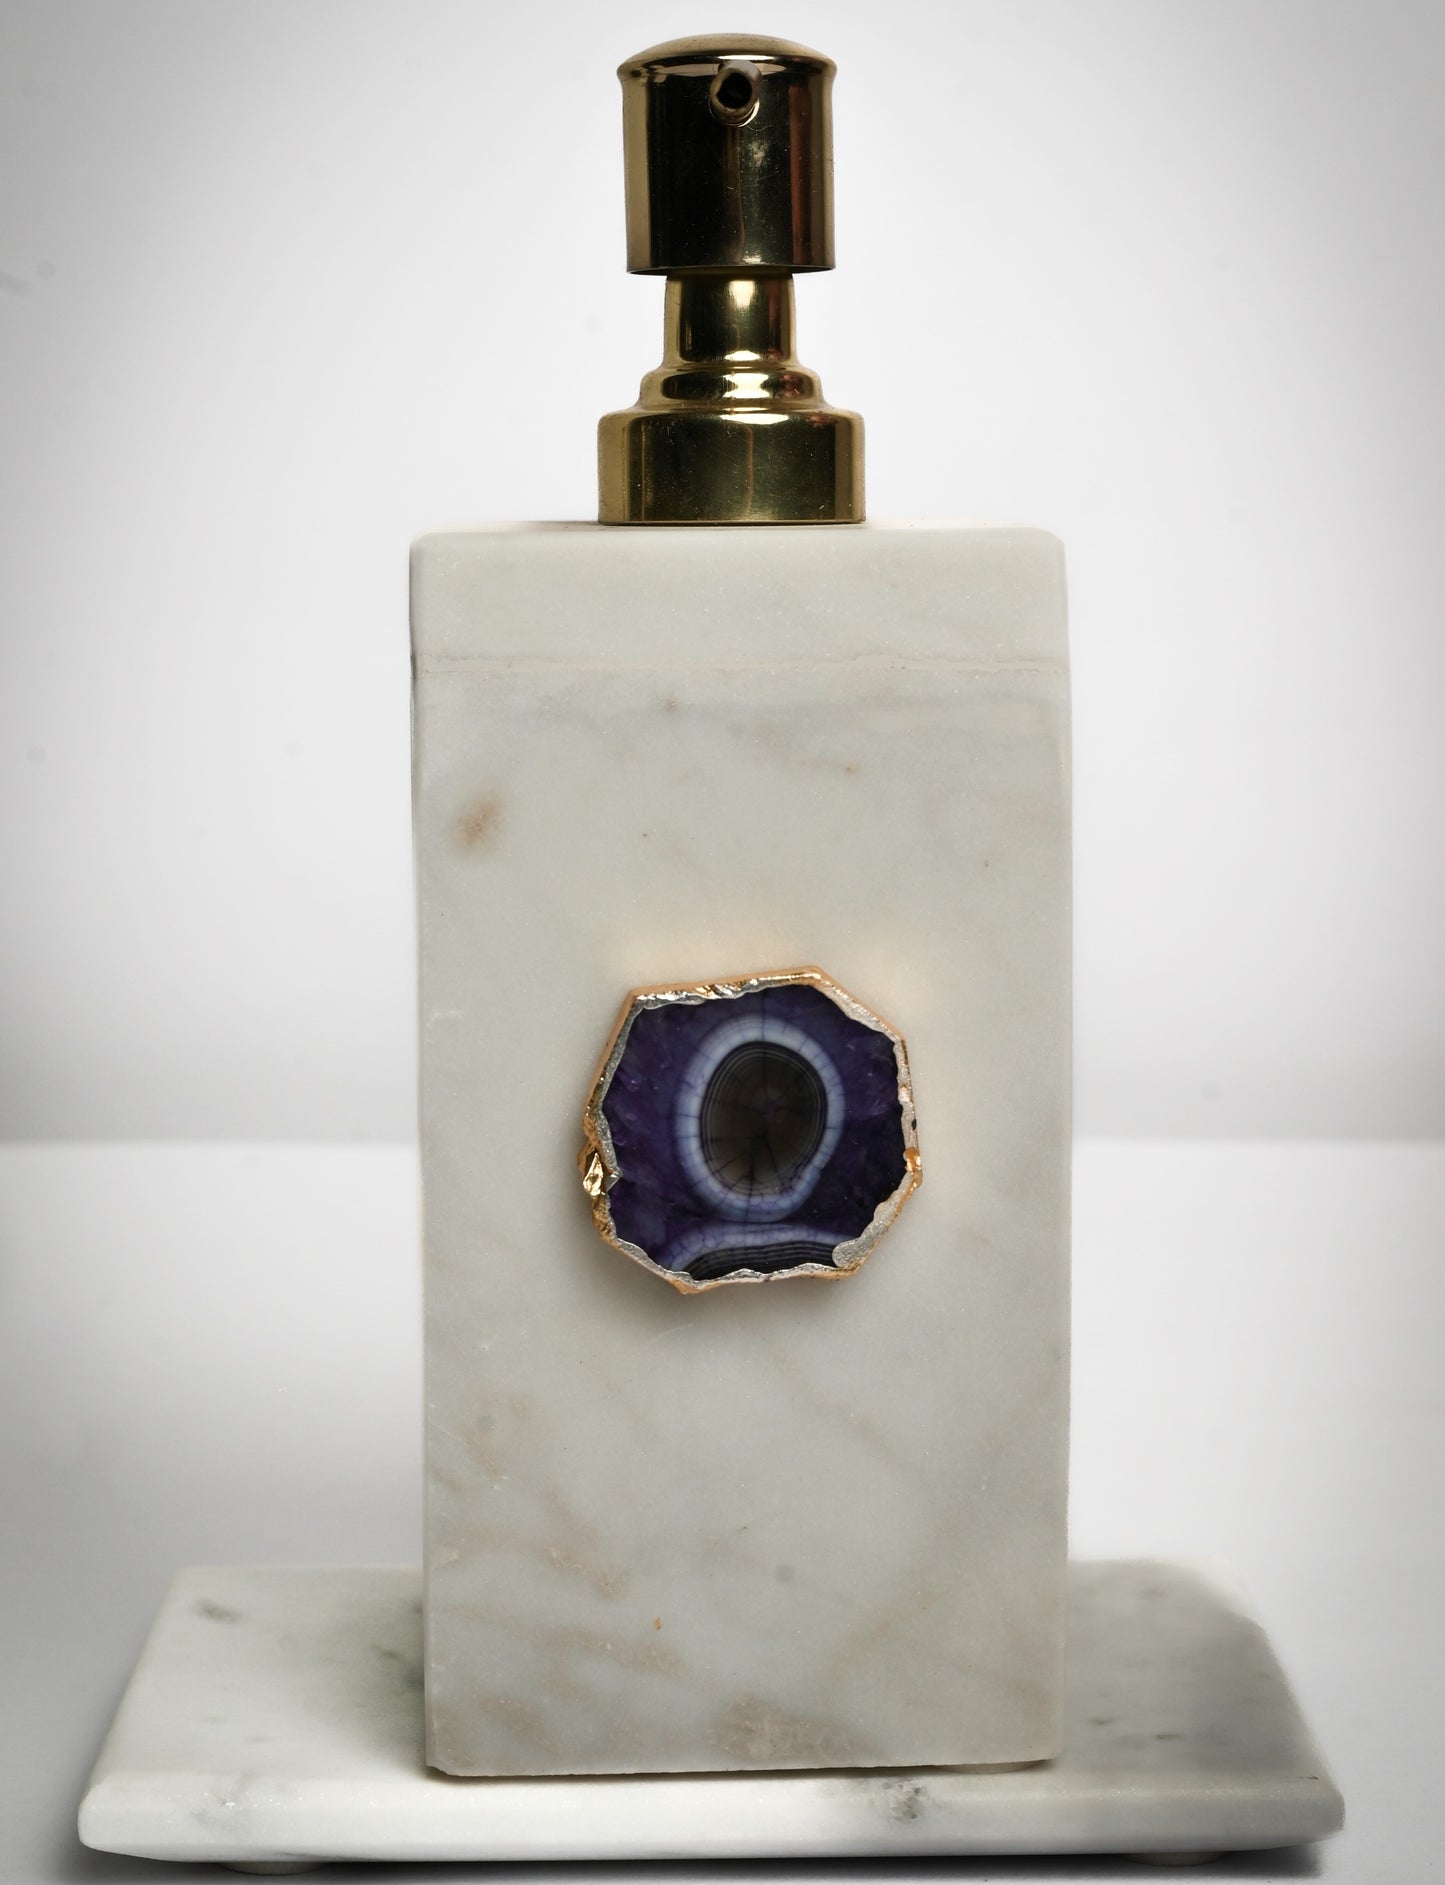 Soap Dispenser for Bathroom Agate Marble Liquid Hand wash with Pump for Kitchen Wash Basin Bathroom Accessories- Purple